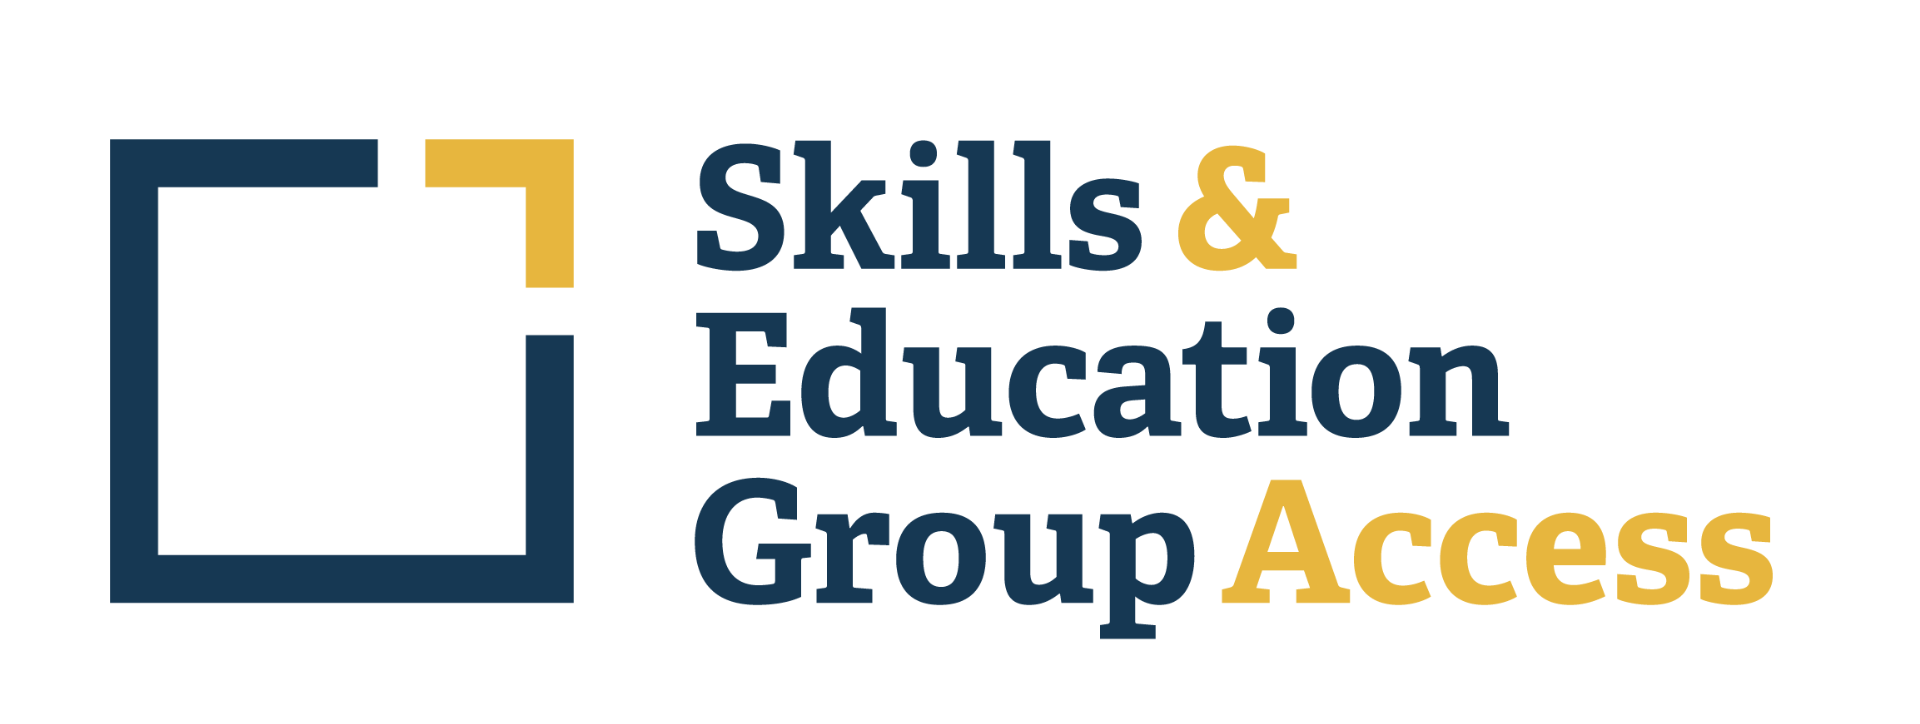 Skills and Education Group Access logo